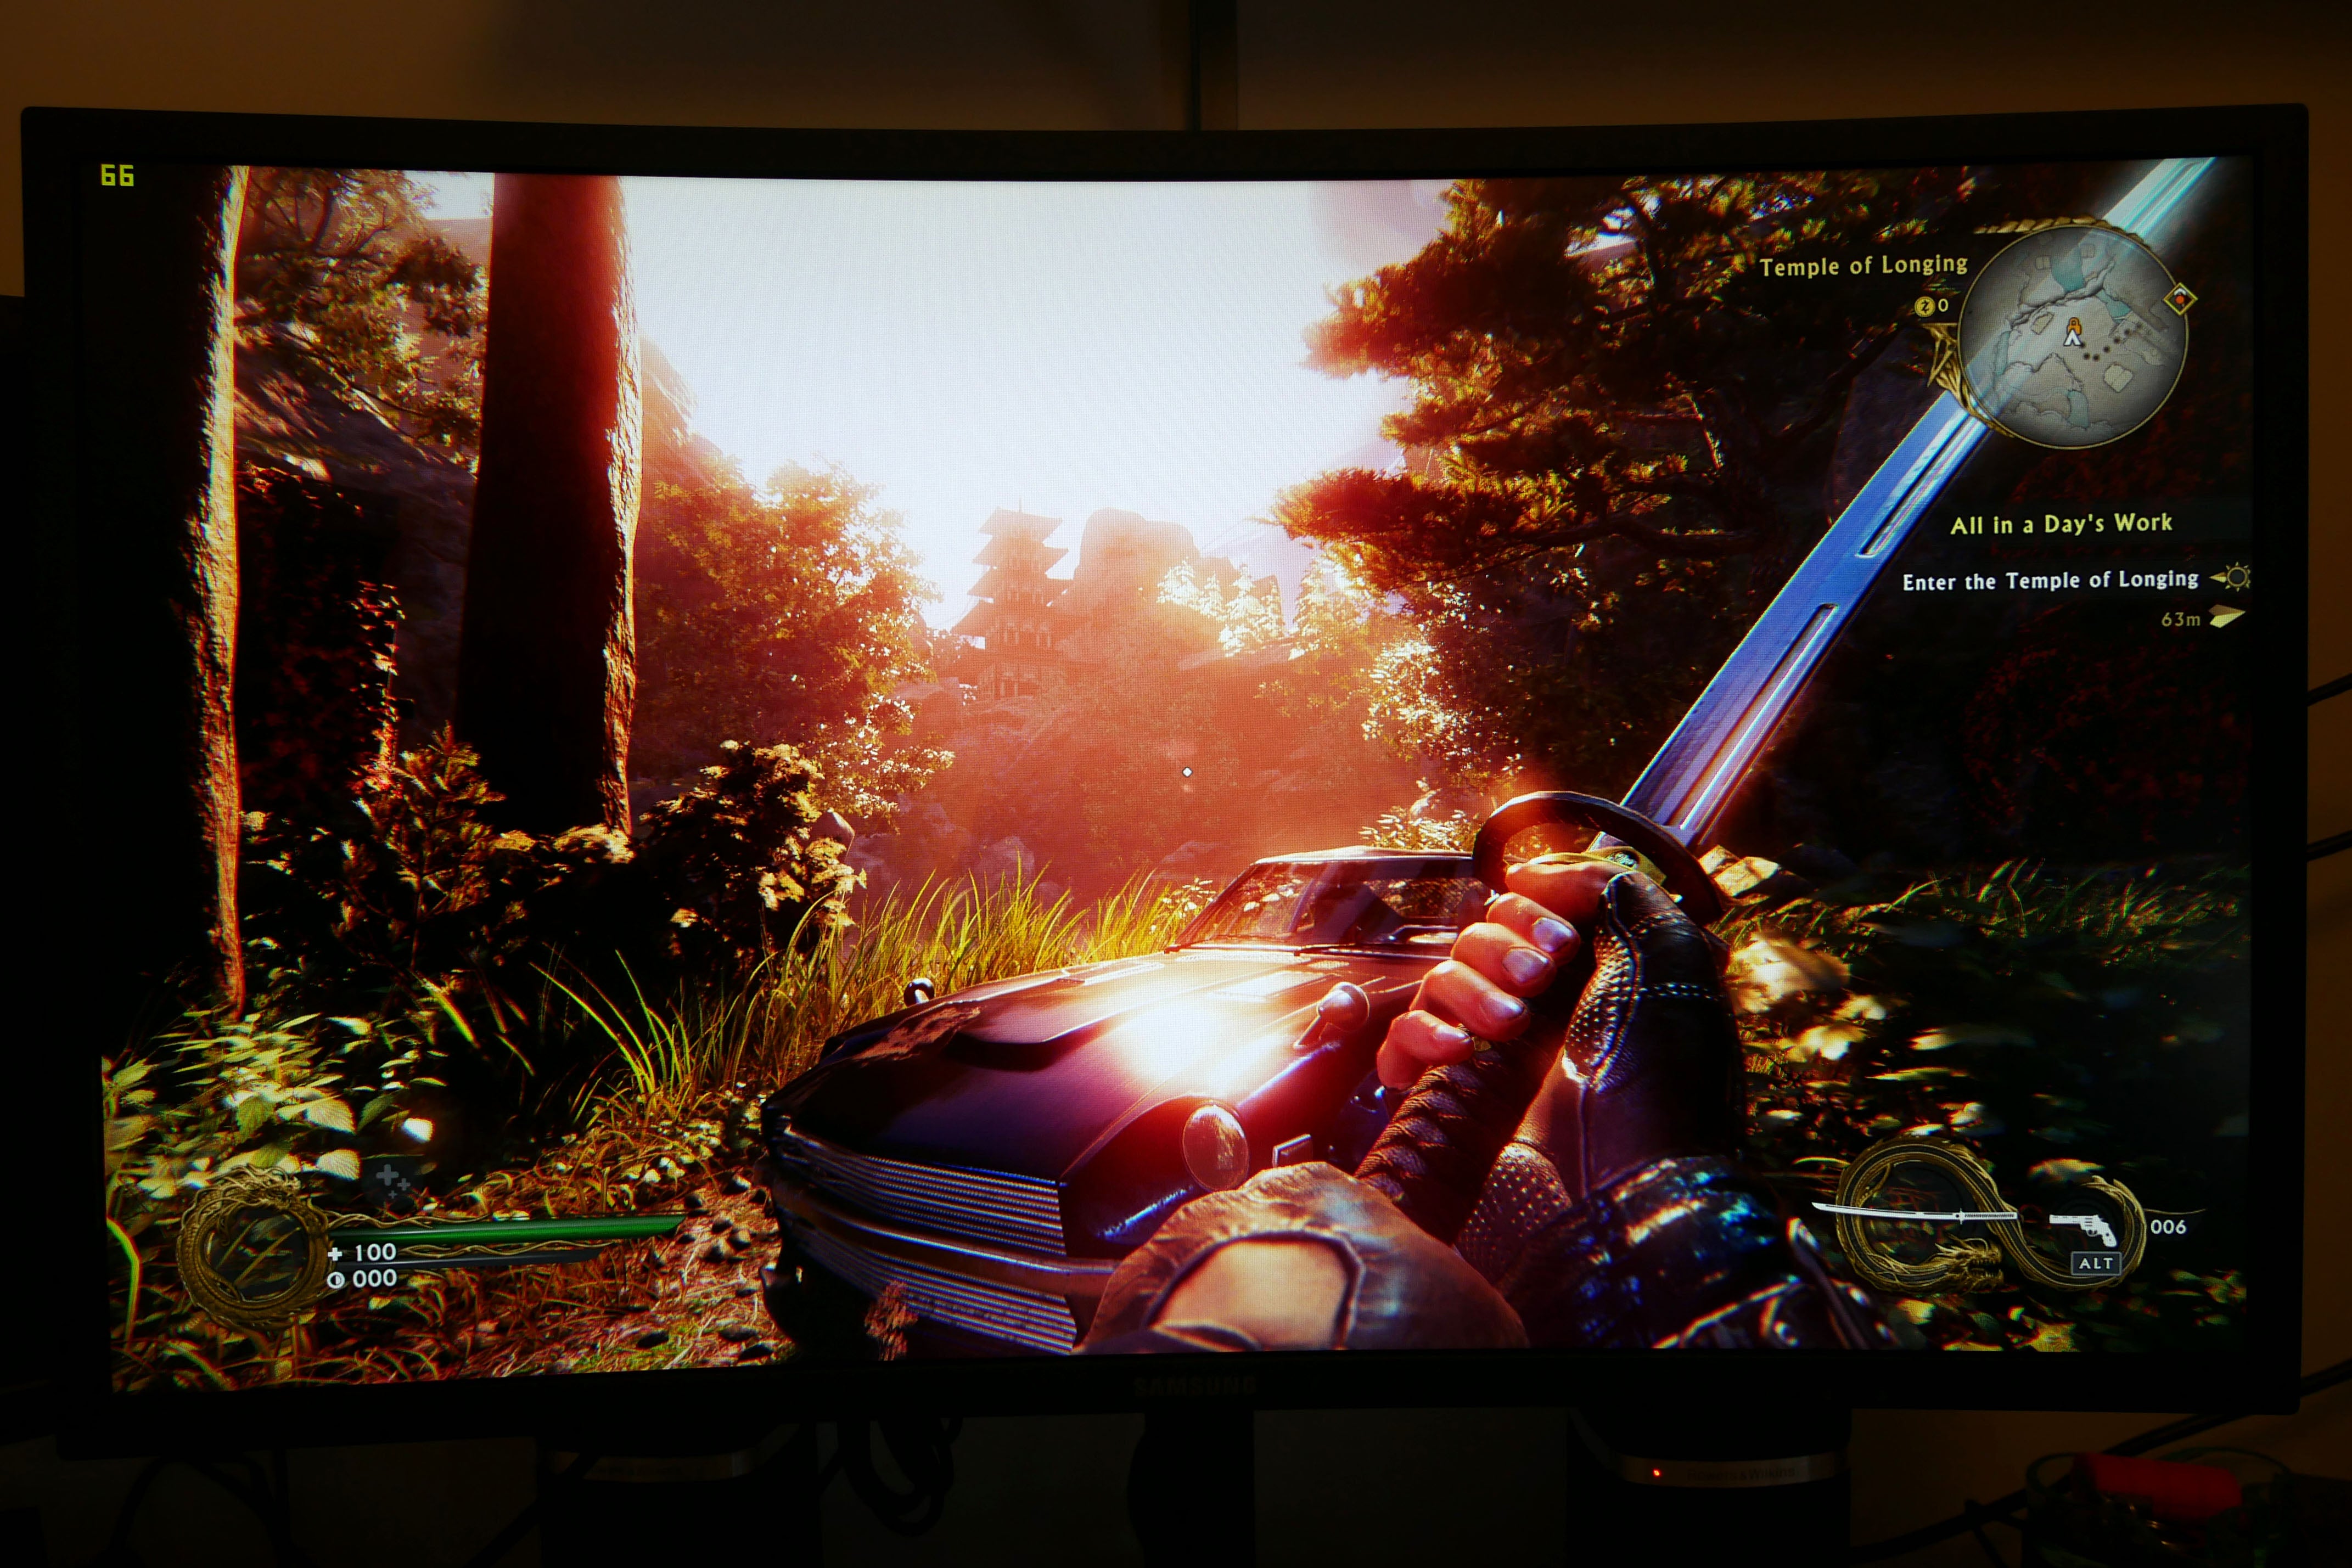 Samsung CHG70 monitor displaying a vibrant gaming scene.